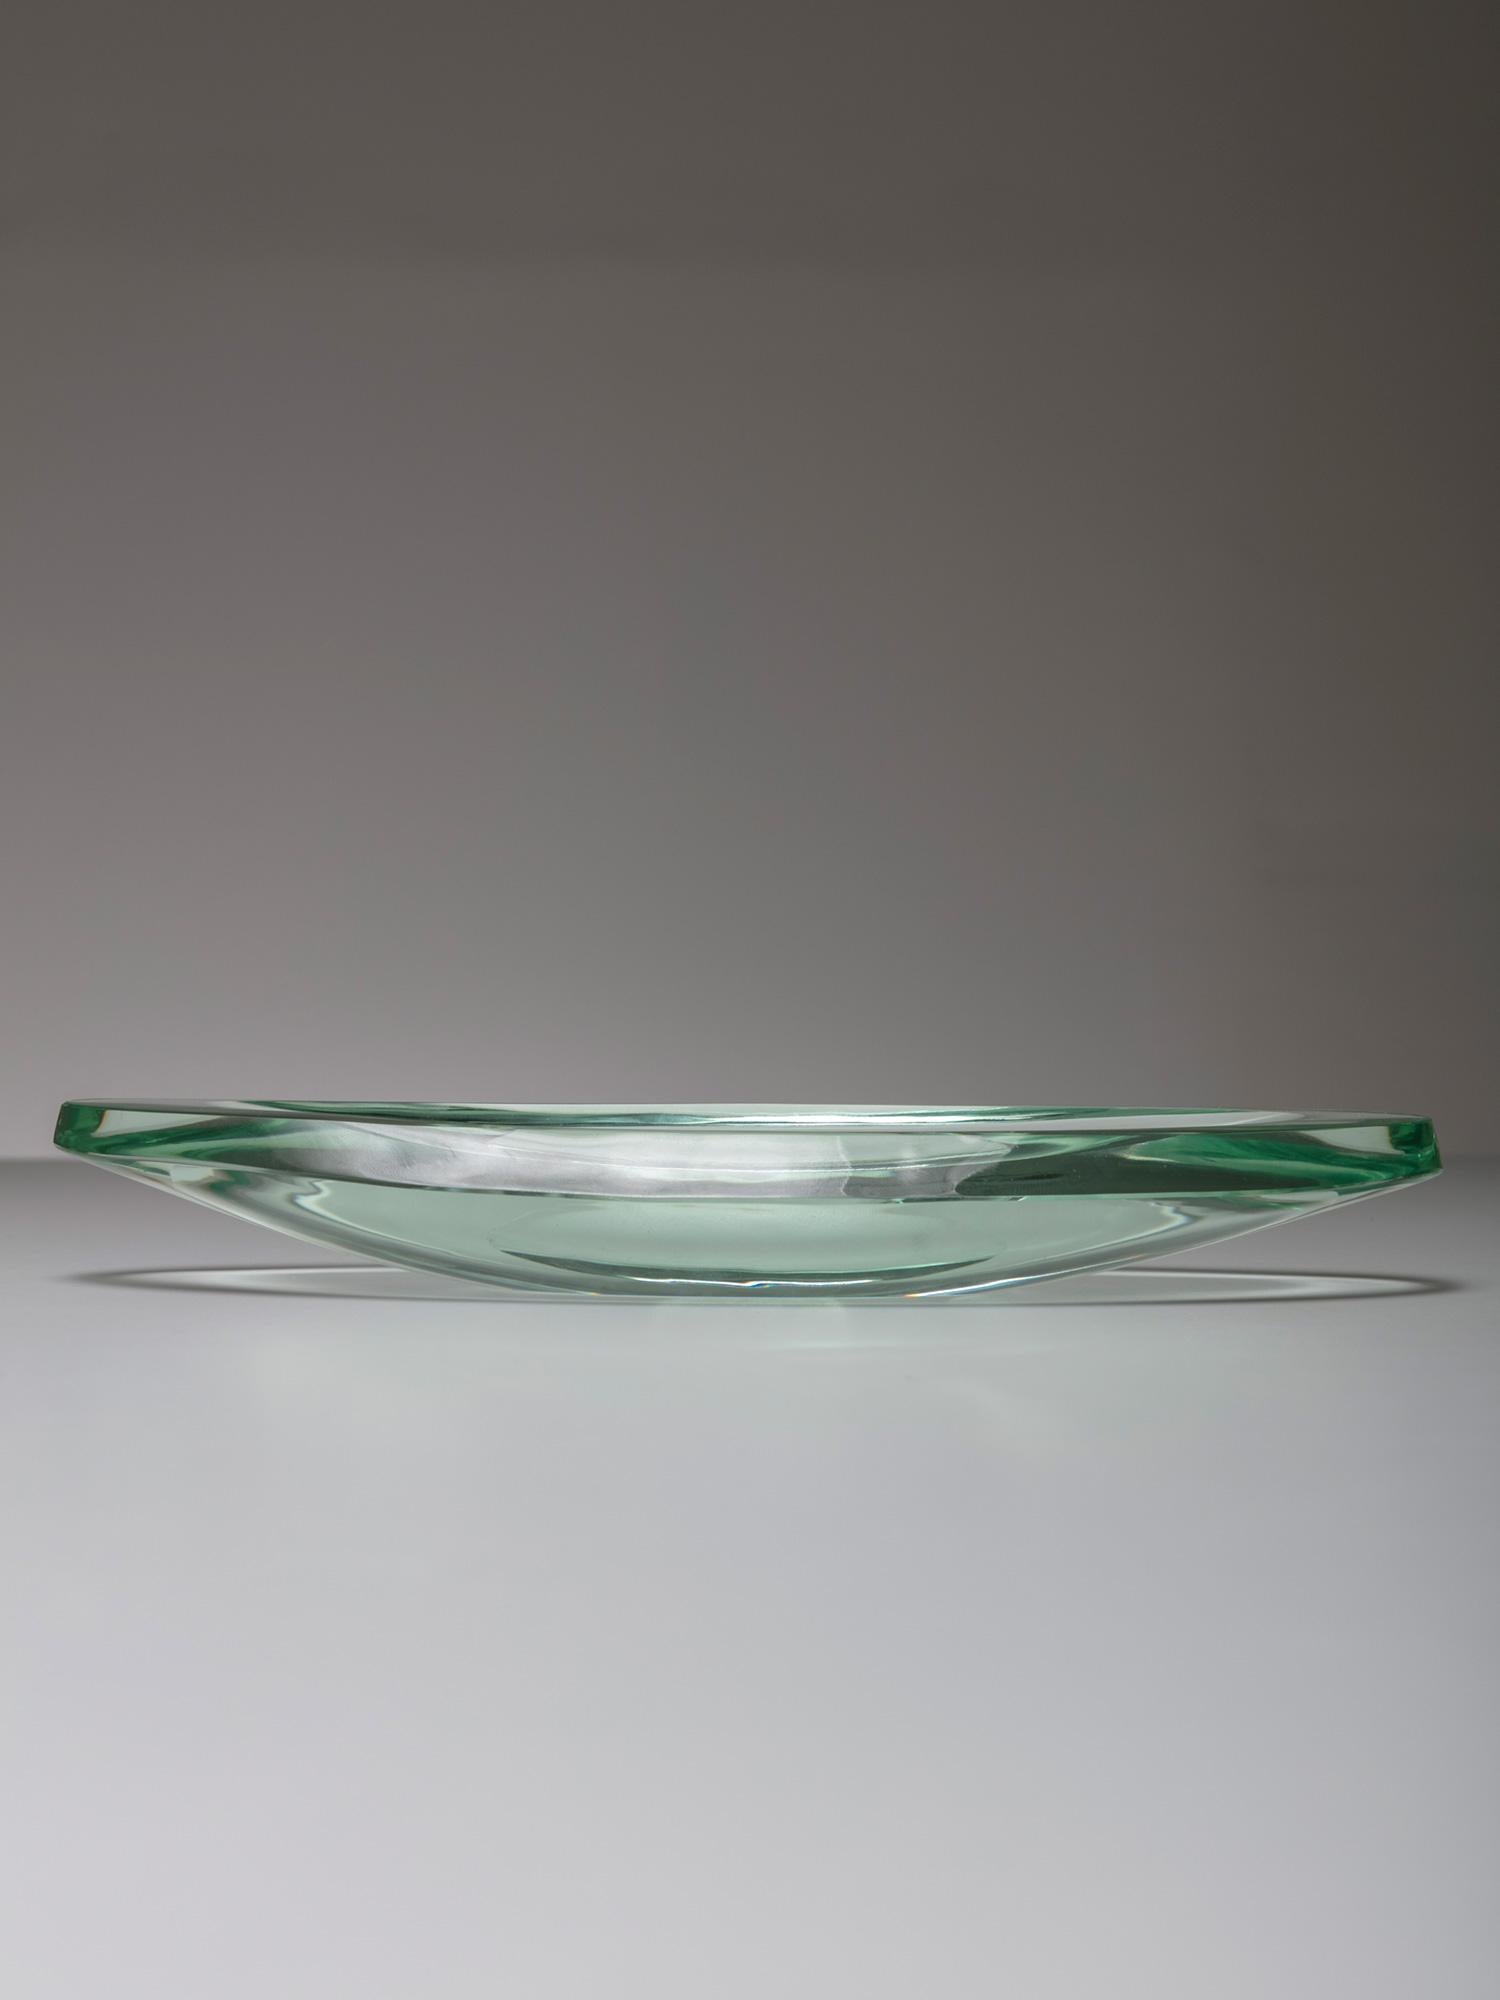 Canoe shaped thick glass tray.